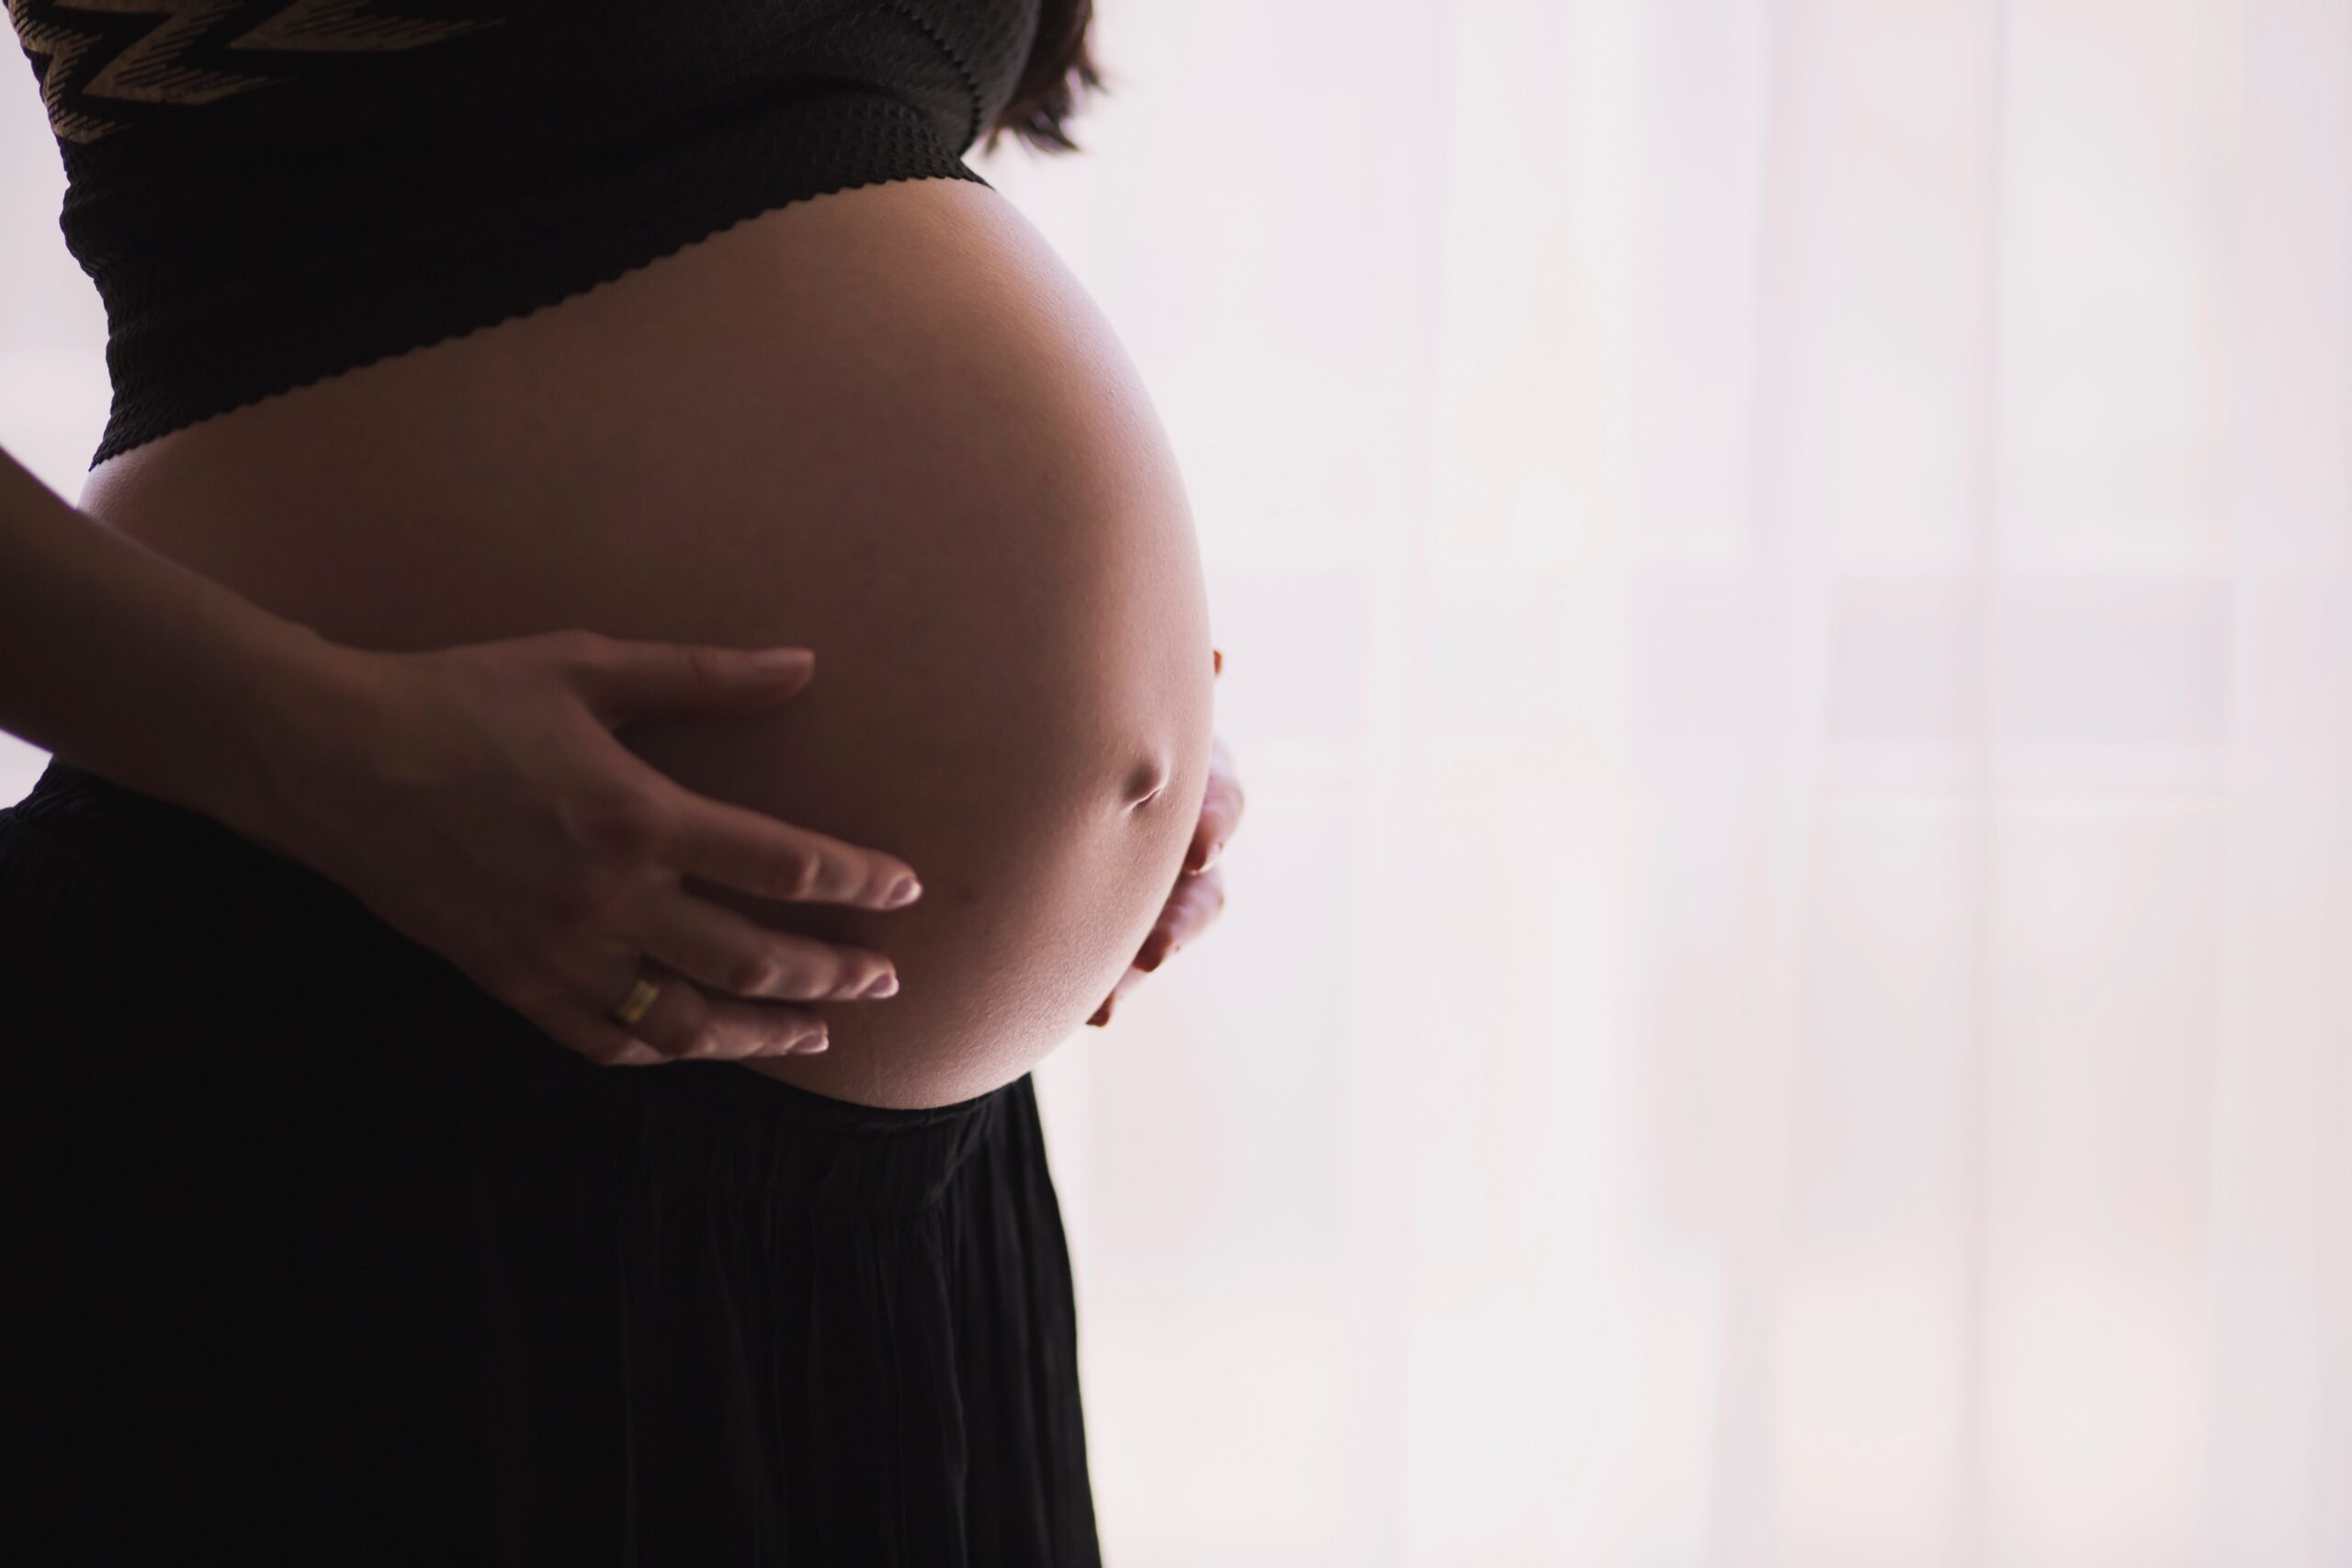 Can Follicular Study Confirm Pregnancy?